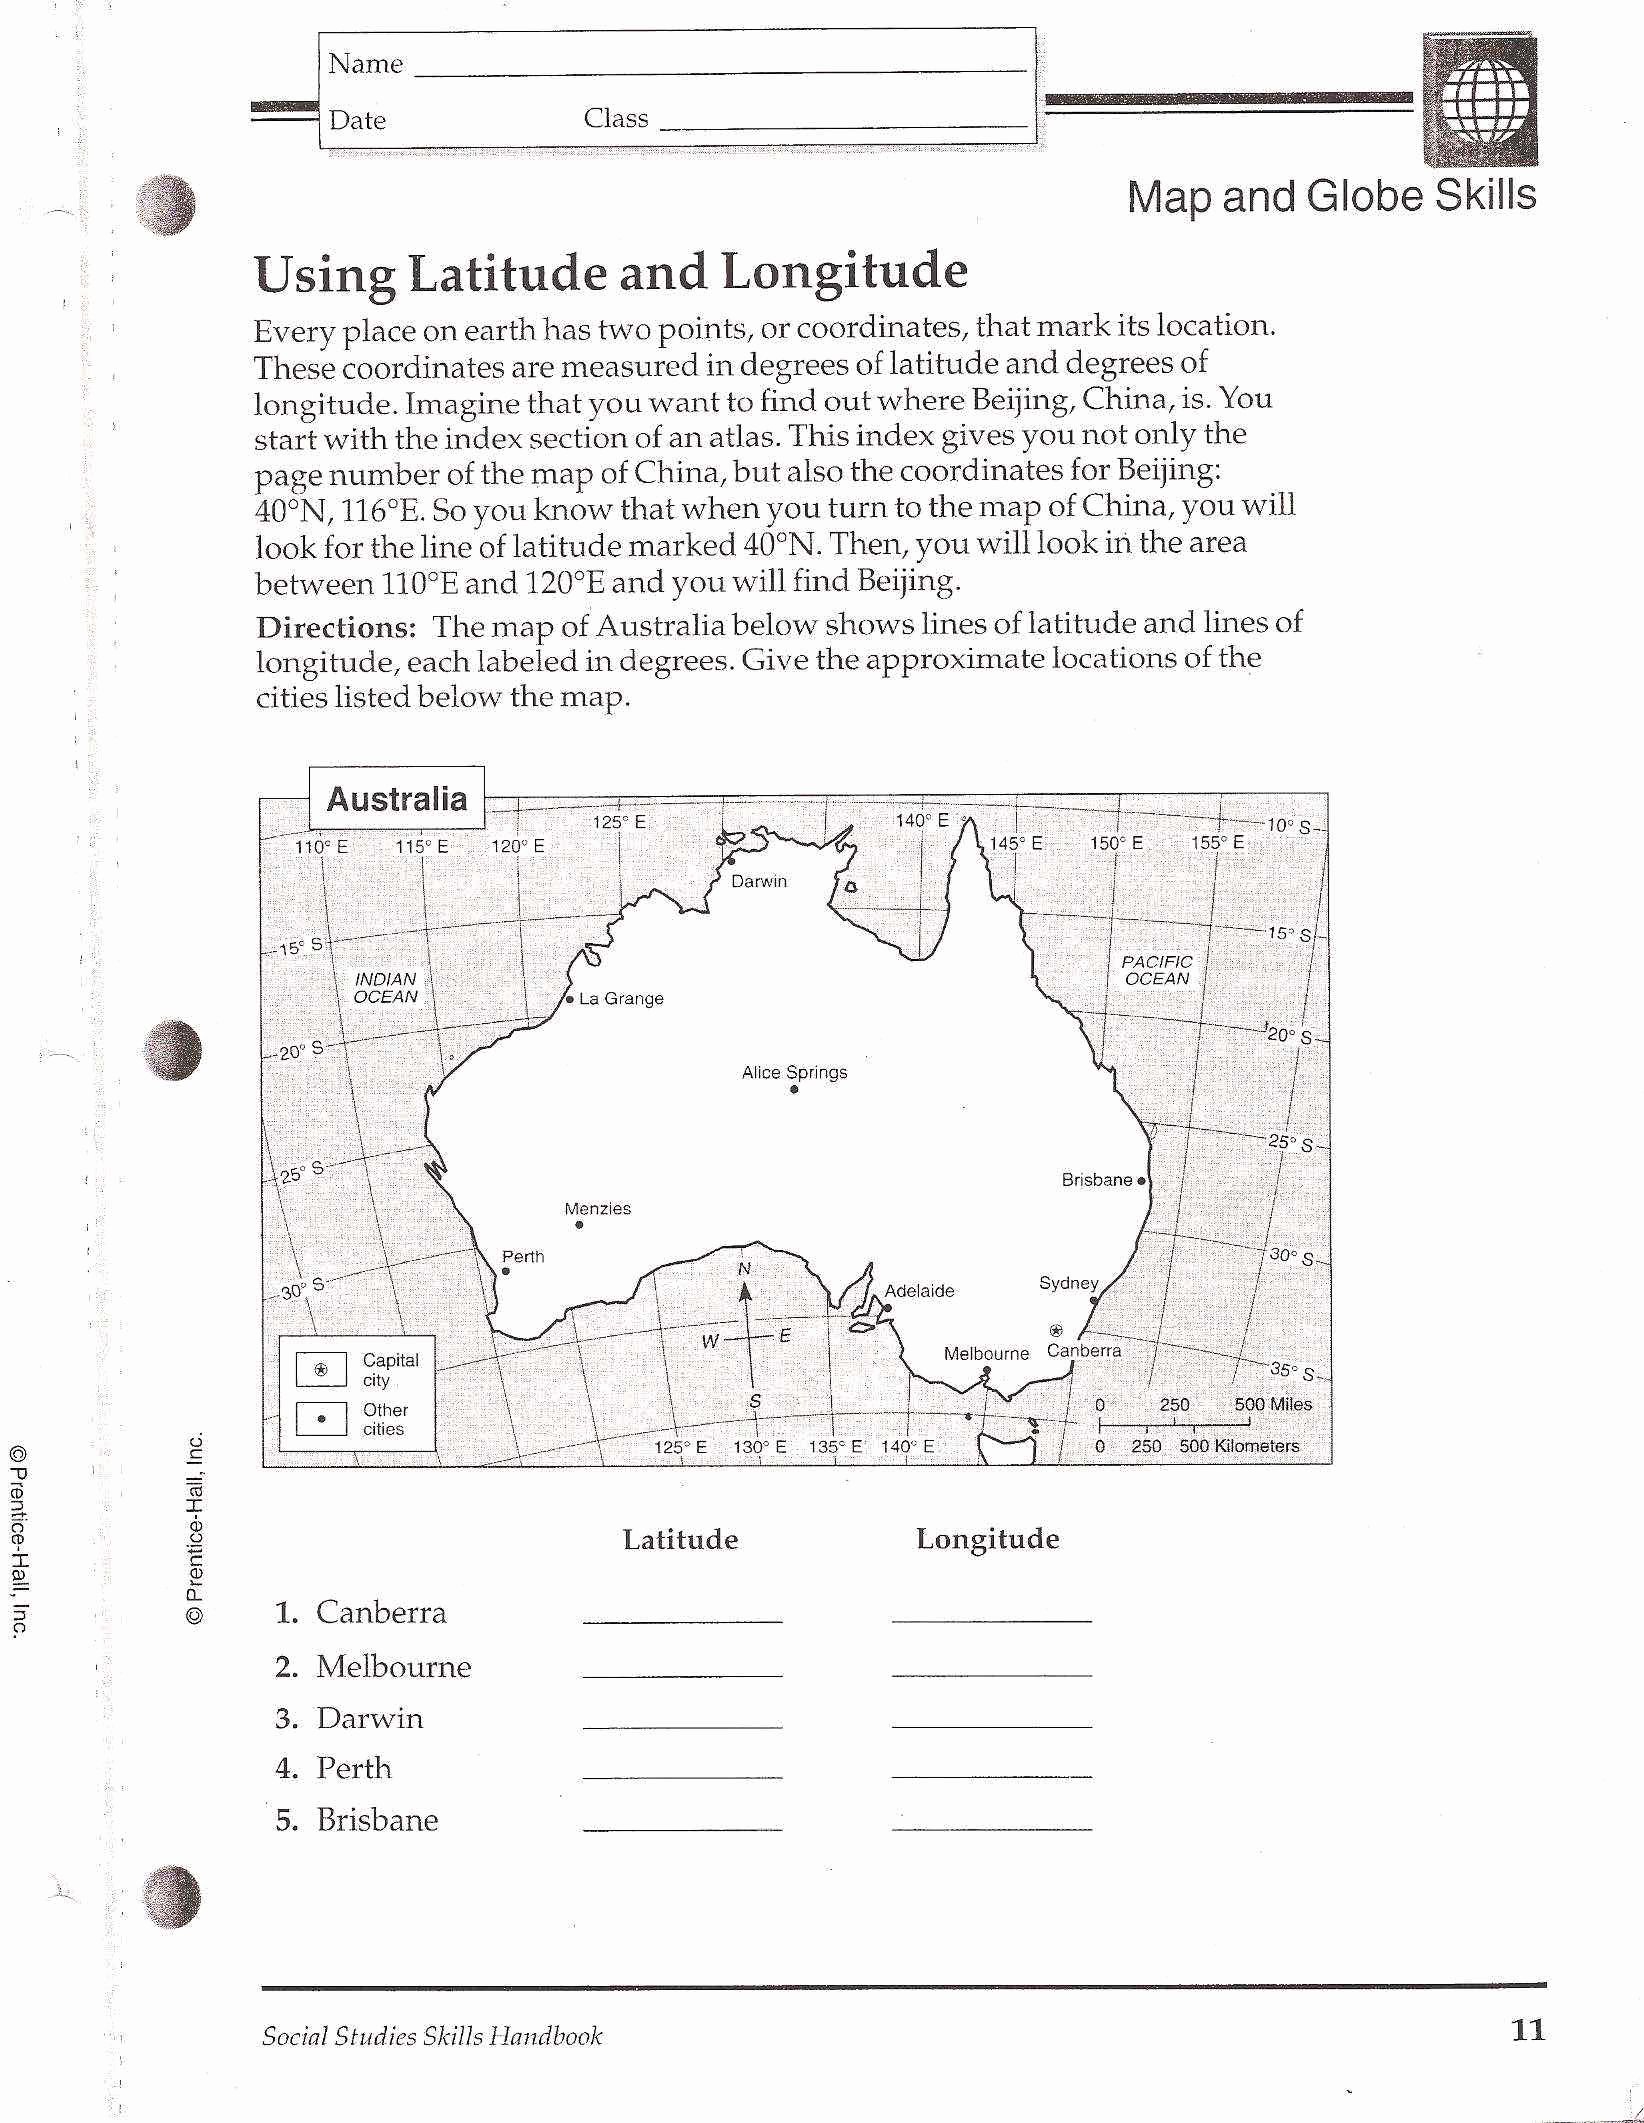 Latitude and Longitude Worksheet Answers Beautiful social Stu S Skills